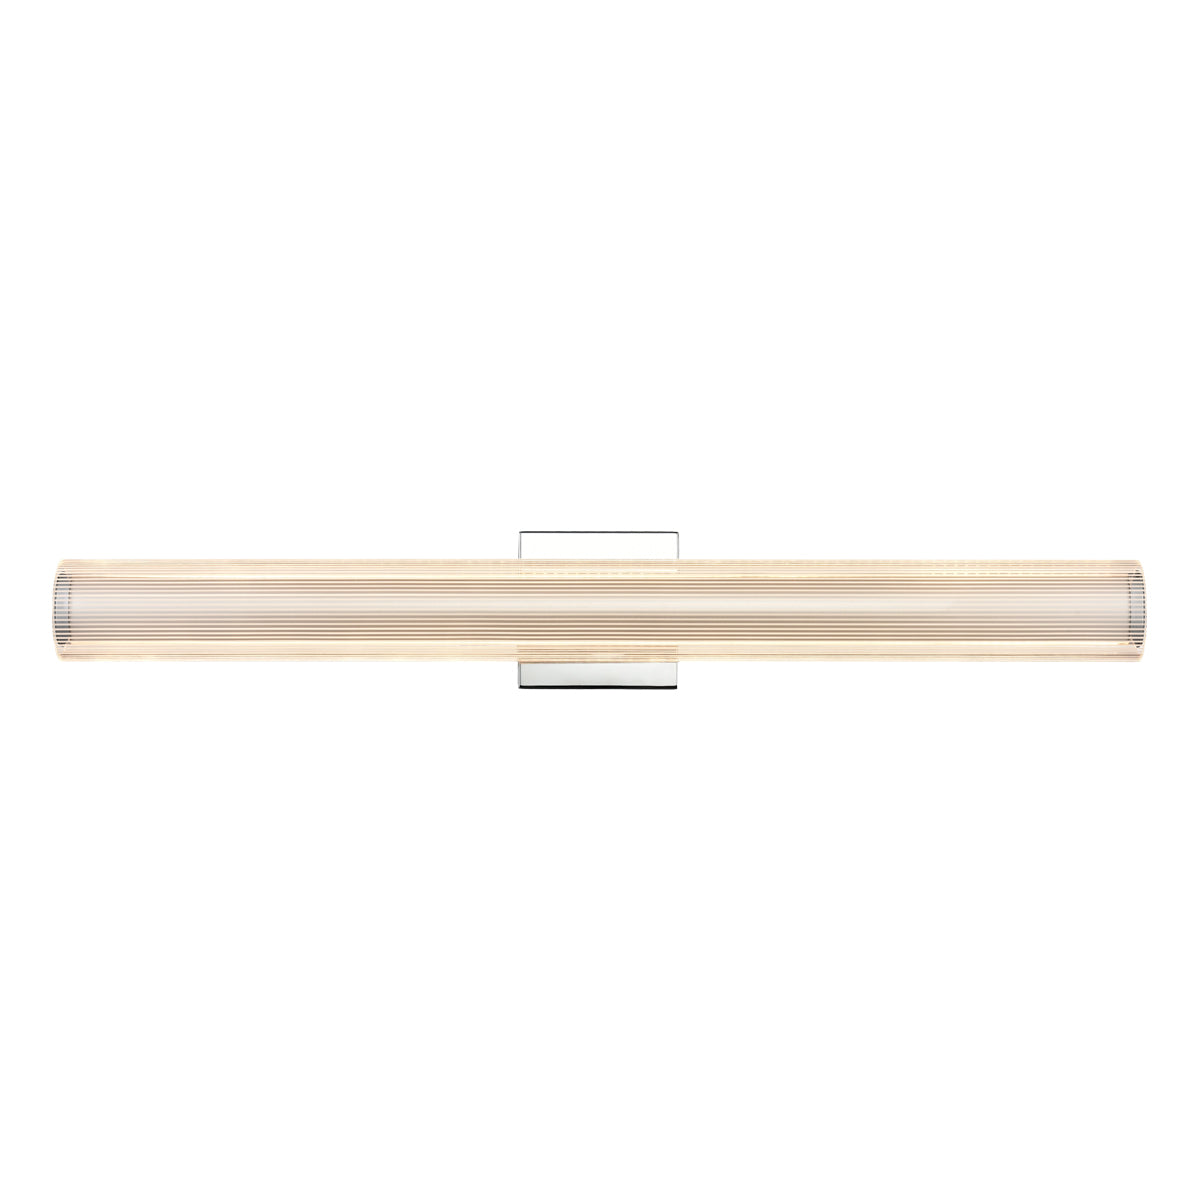 LANDOR Bathroom sconce Chrome - 37159-016 INTEGRATED LED | EUROFASE